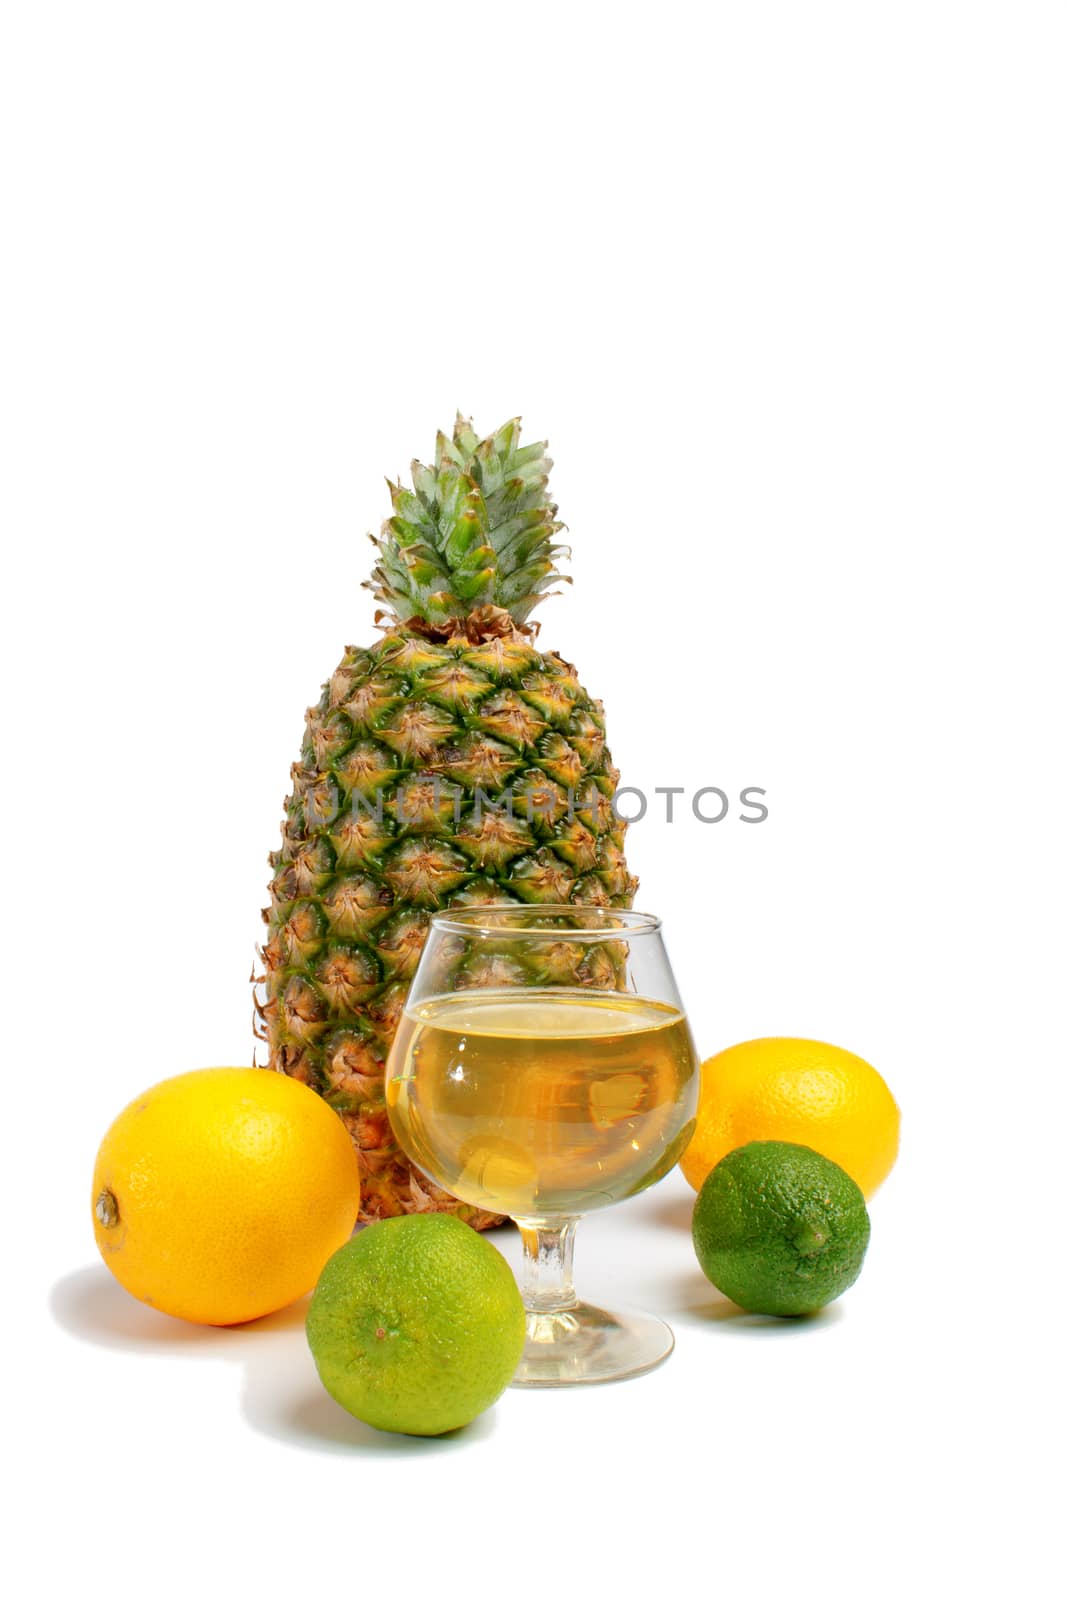 pineapple lemon and lime with a nice fruit juice